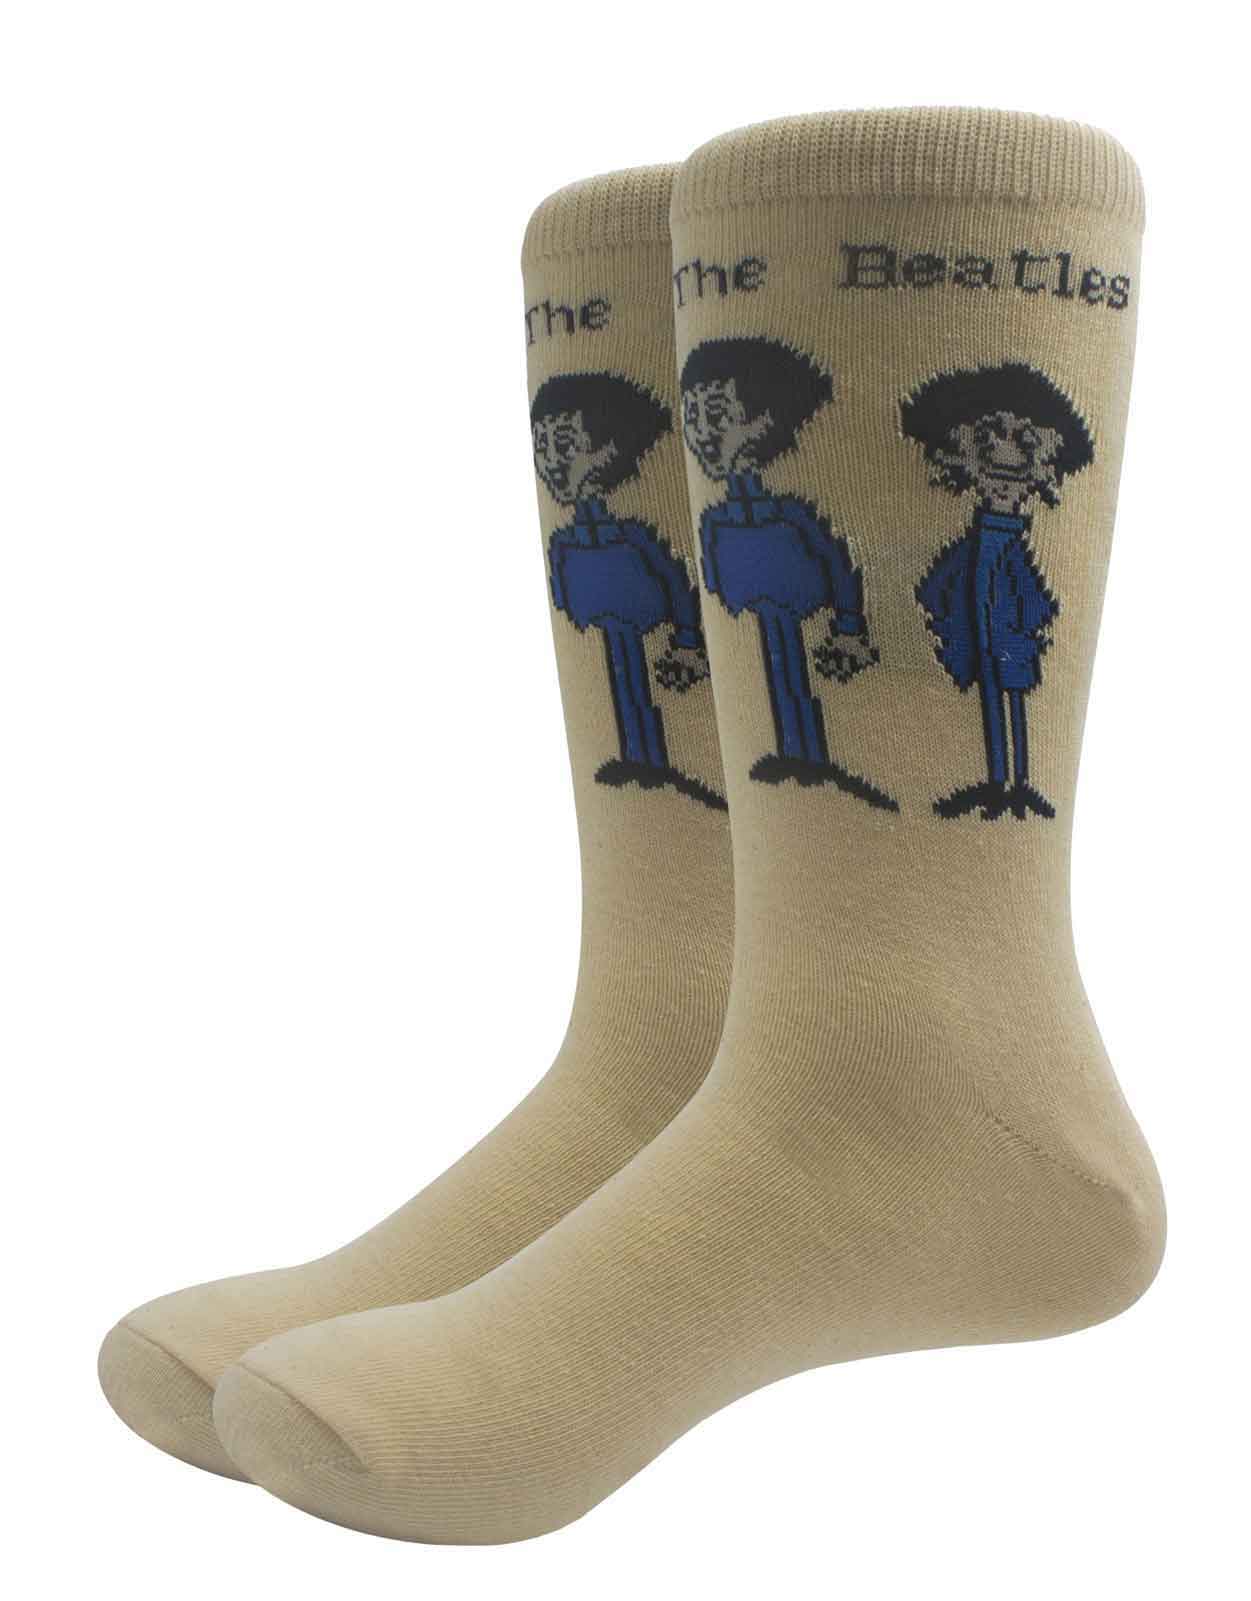 The Beatles Cartoon Group Standing Socks